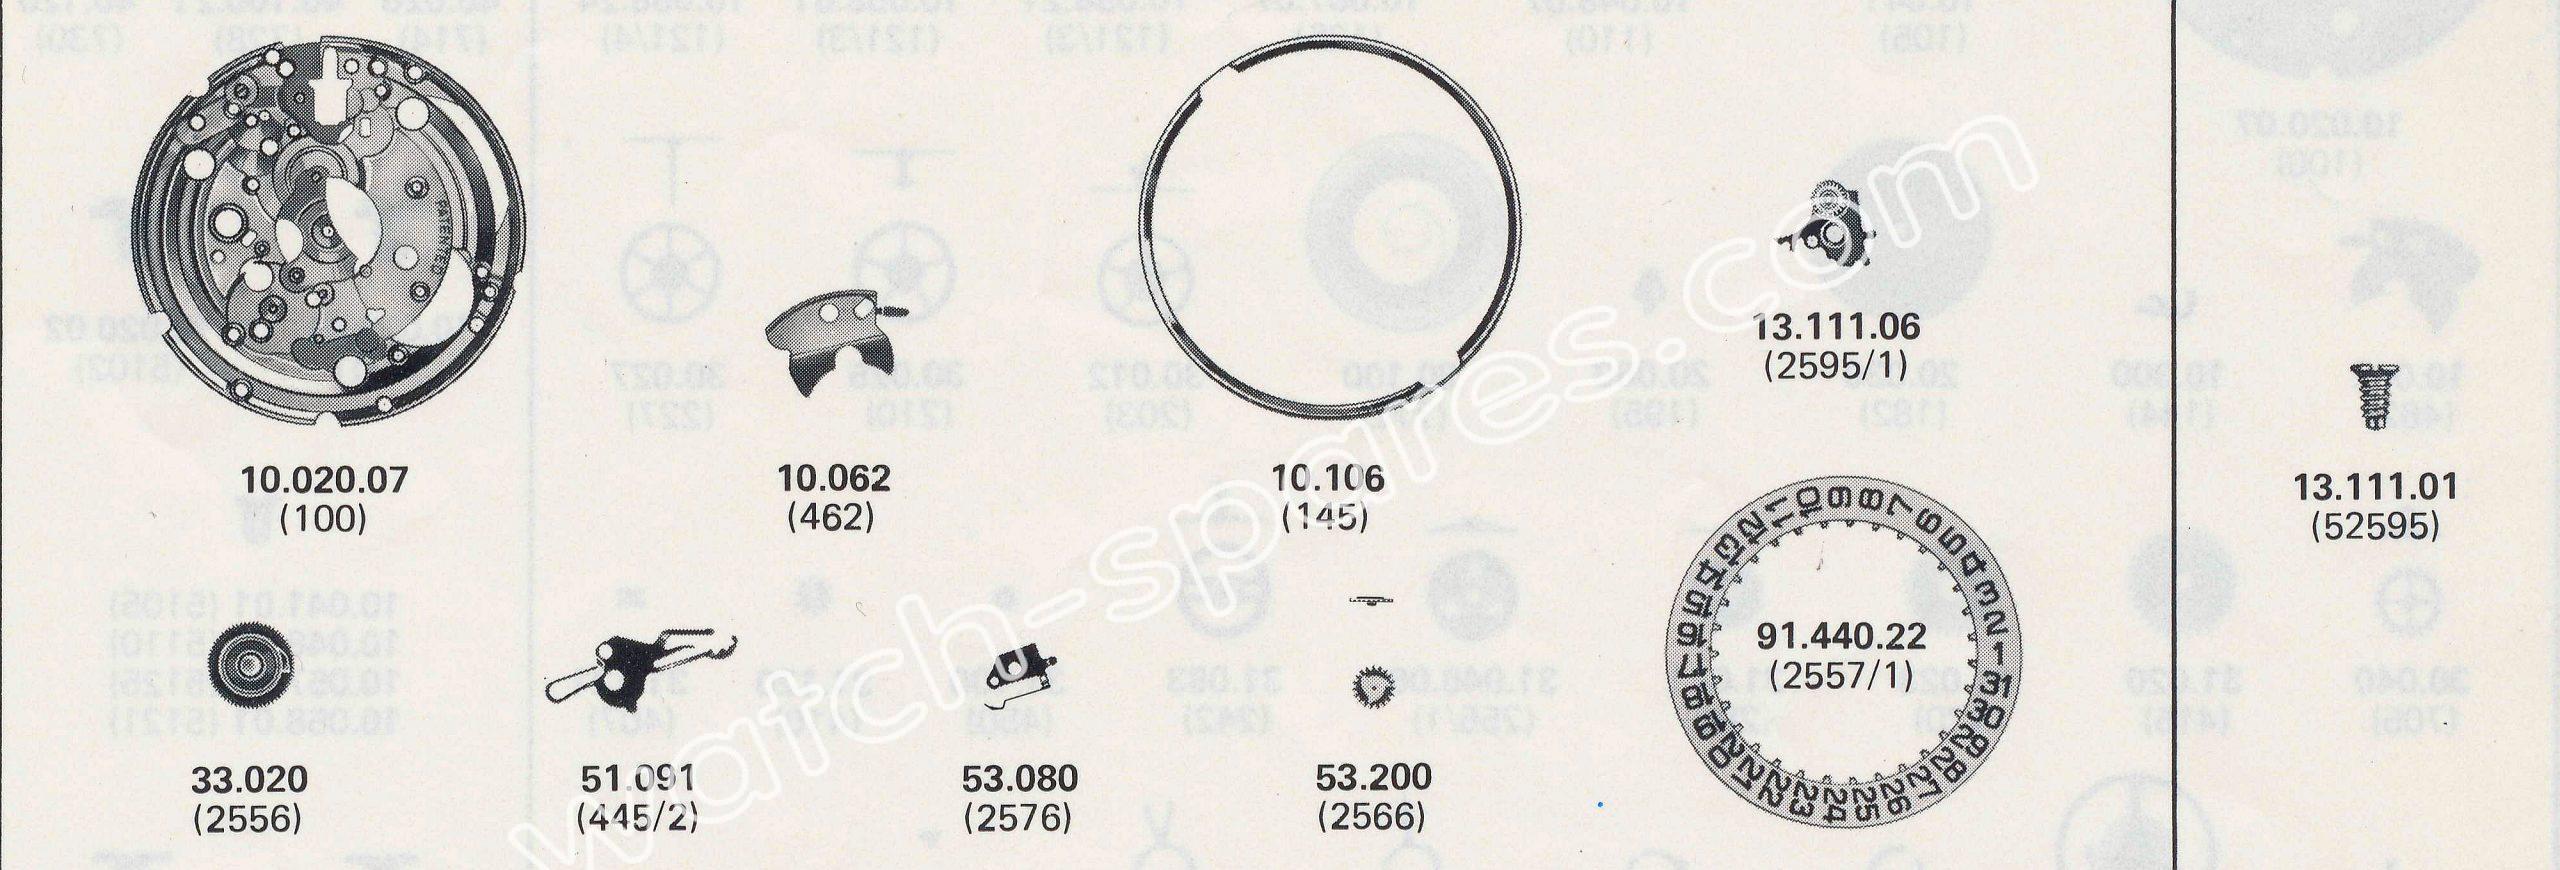 ETA 2804.1 watch date spare parts